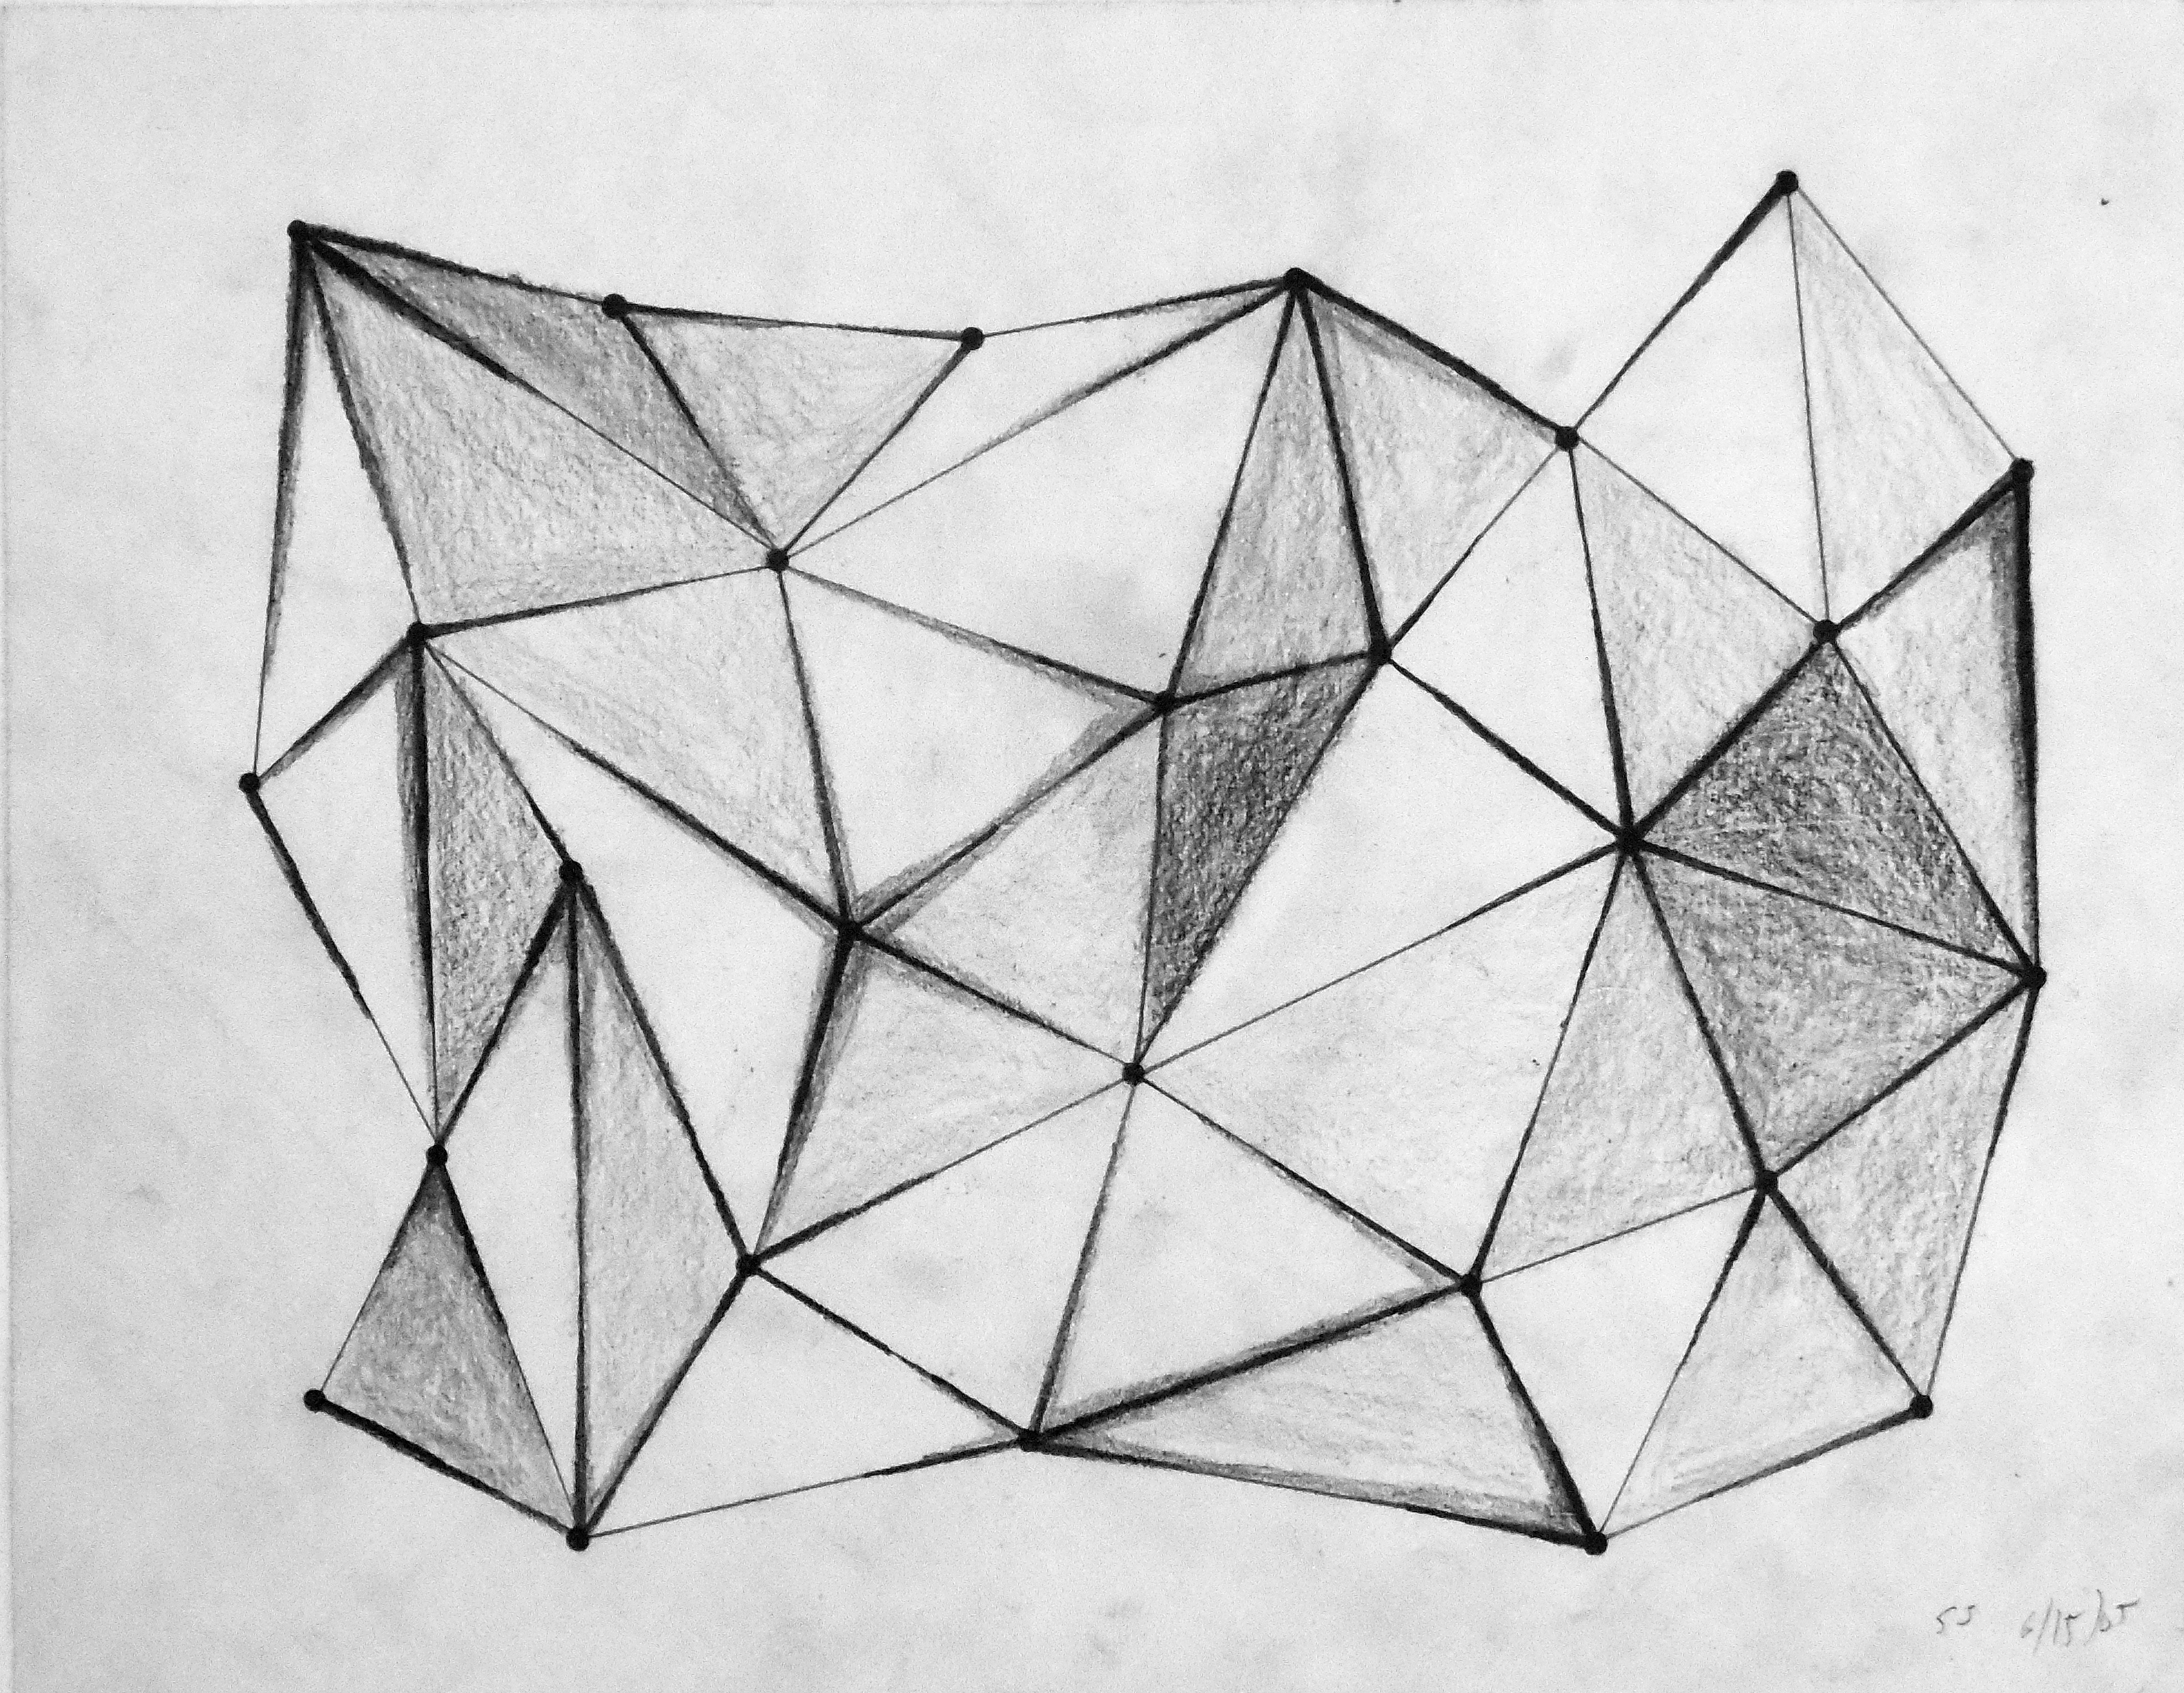 Distorted Tetrahedra